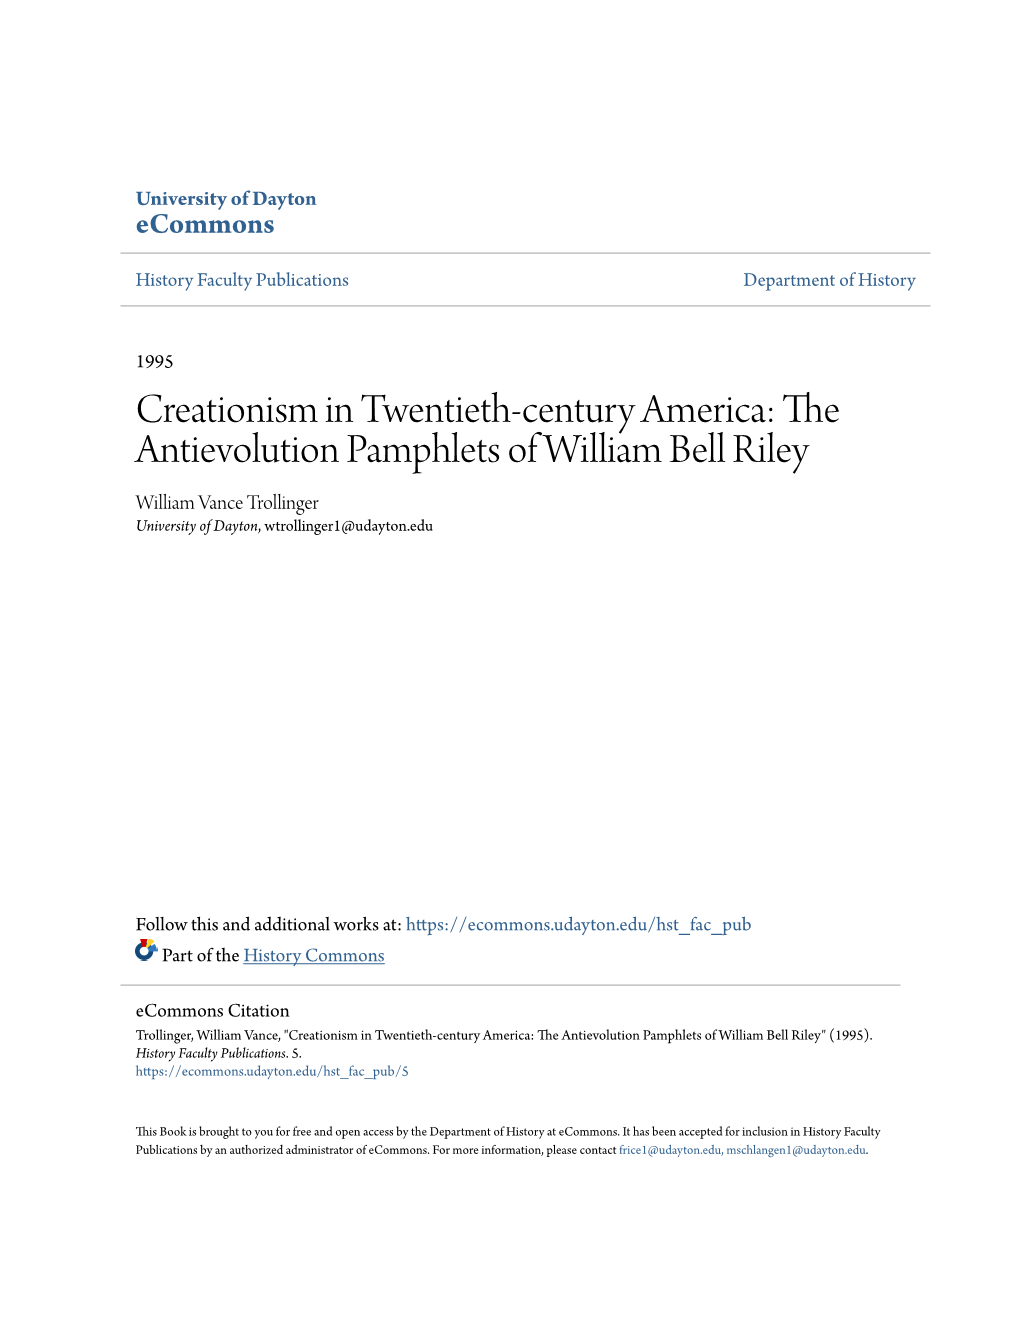 Creationism in Twentieth-Century America: the Antievolution Pamphlets of William Bell Riley William Vance Trollinger University of Dayton, Wtrollinger1@Udayton.Edu